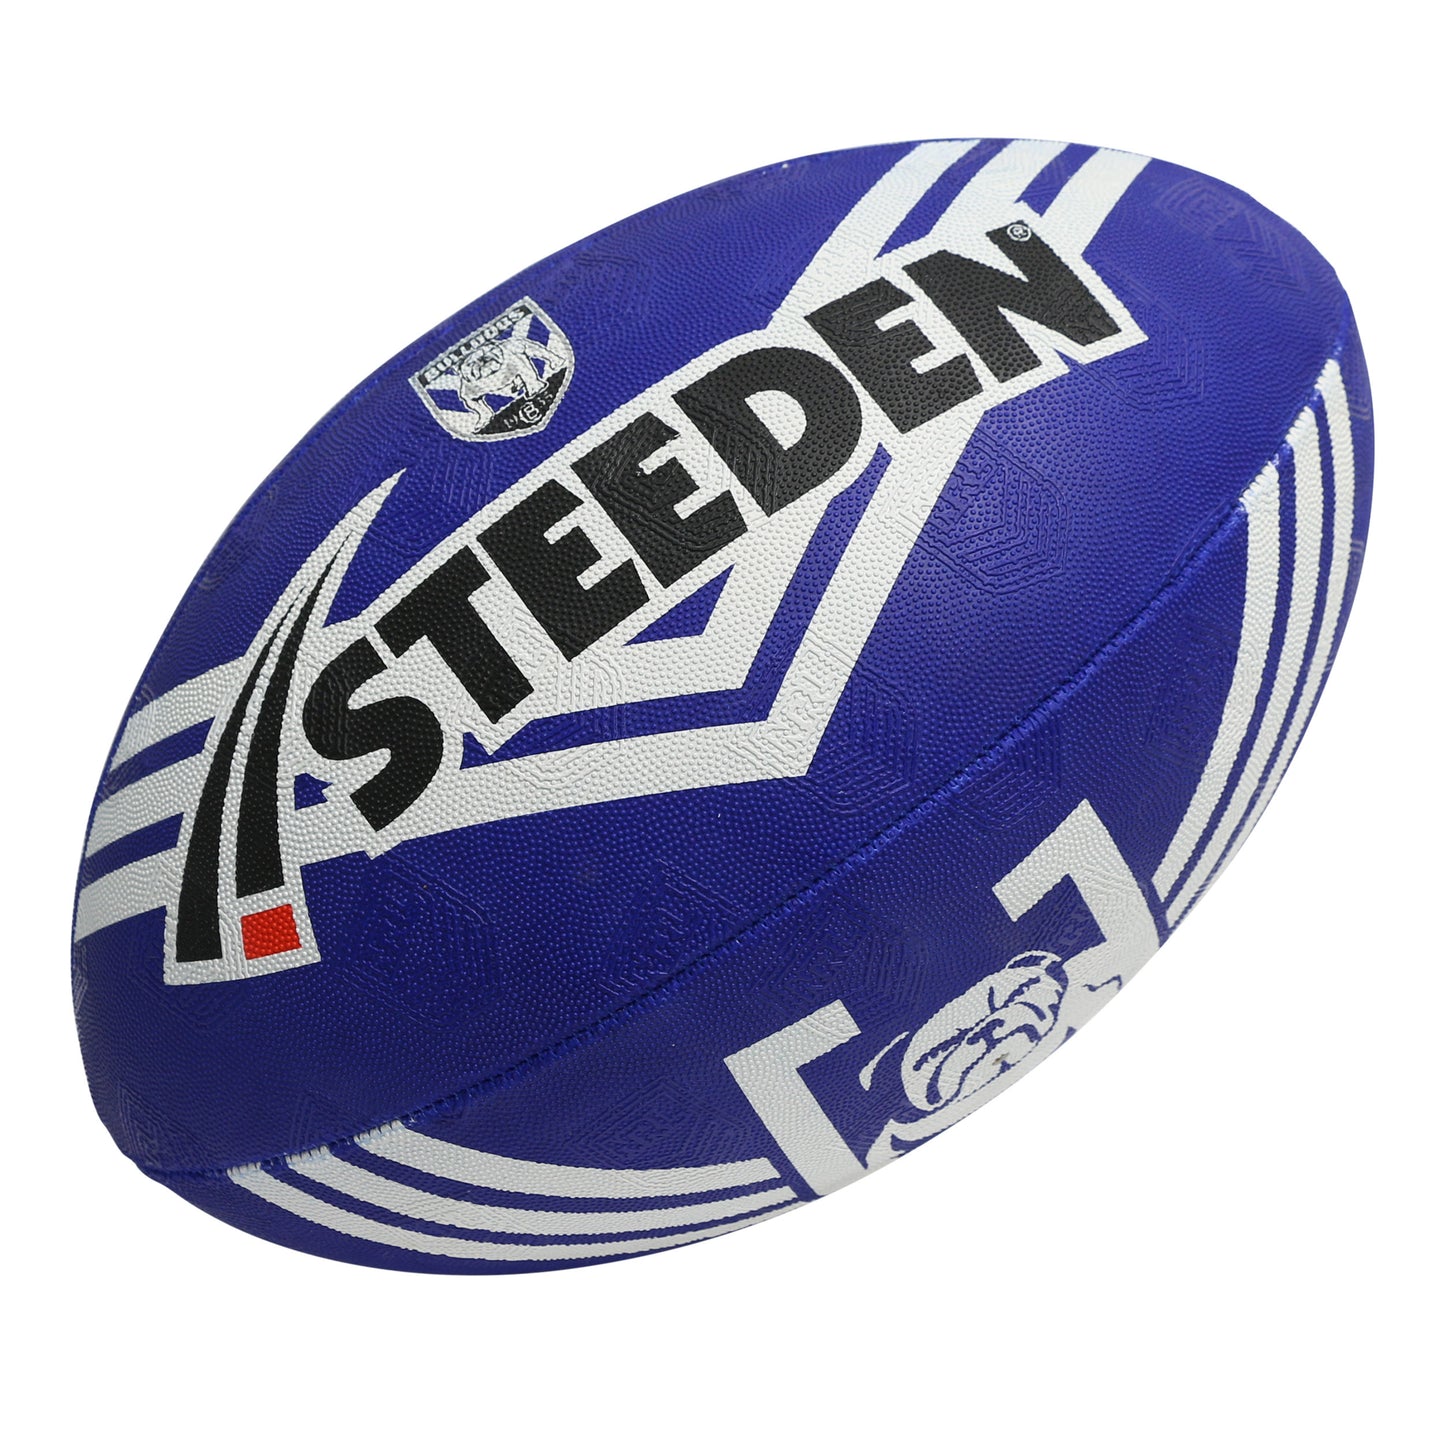 NRL Bulldogs Supporter Ball (11 inch)